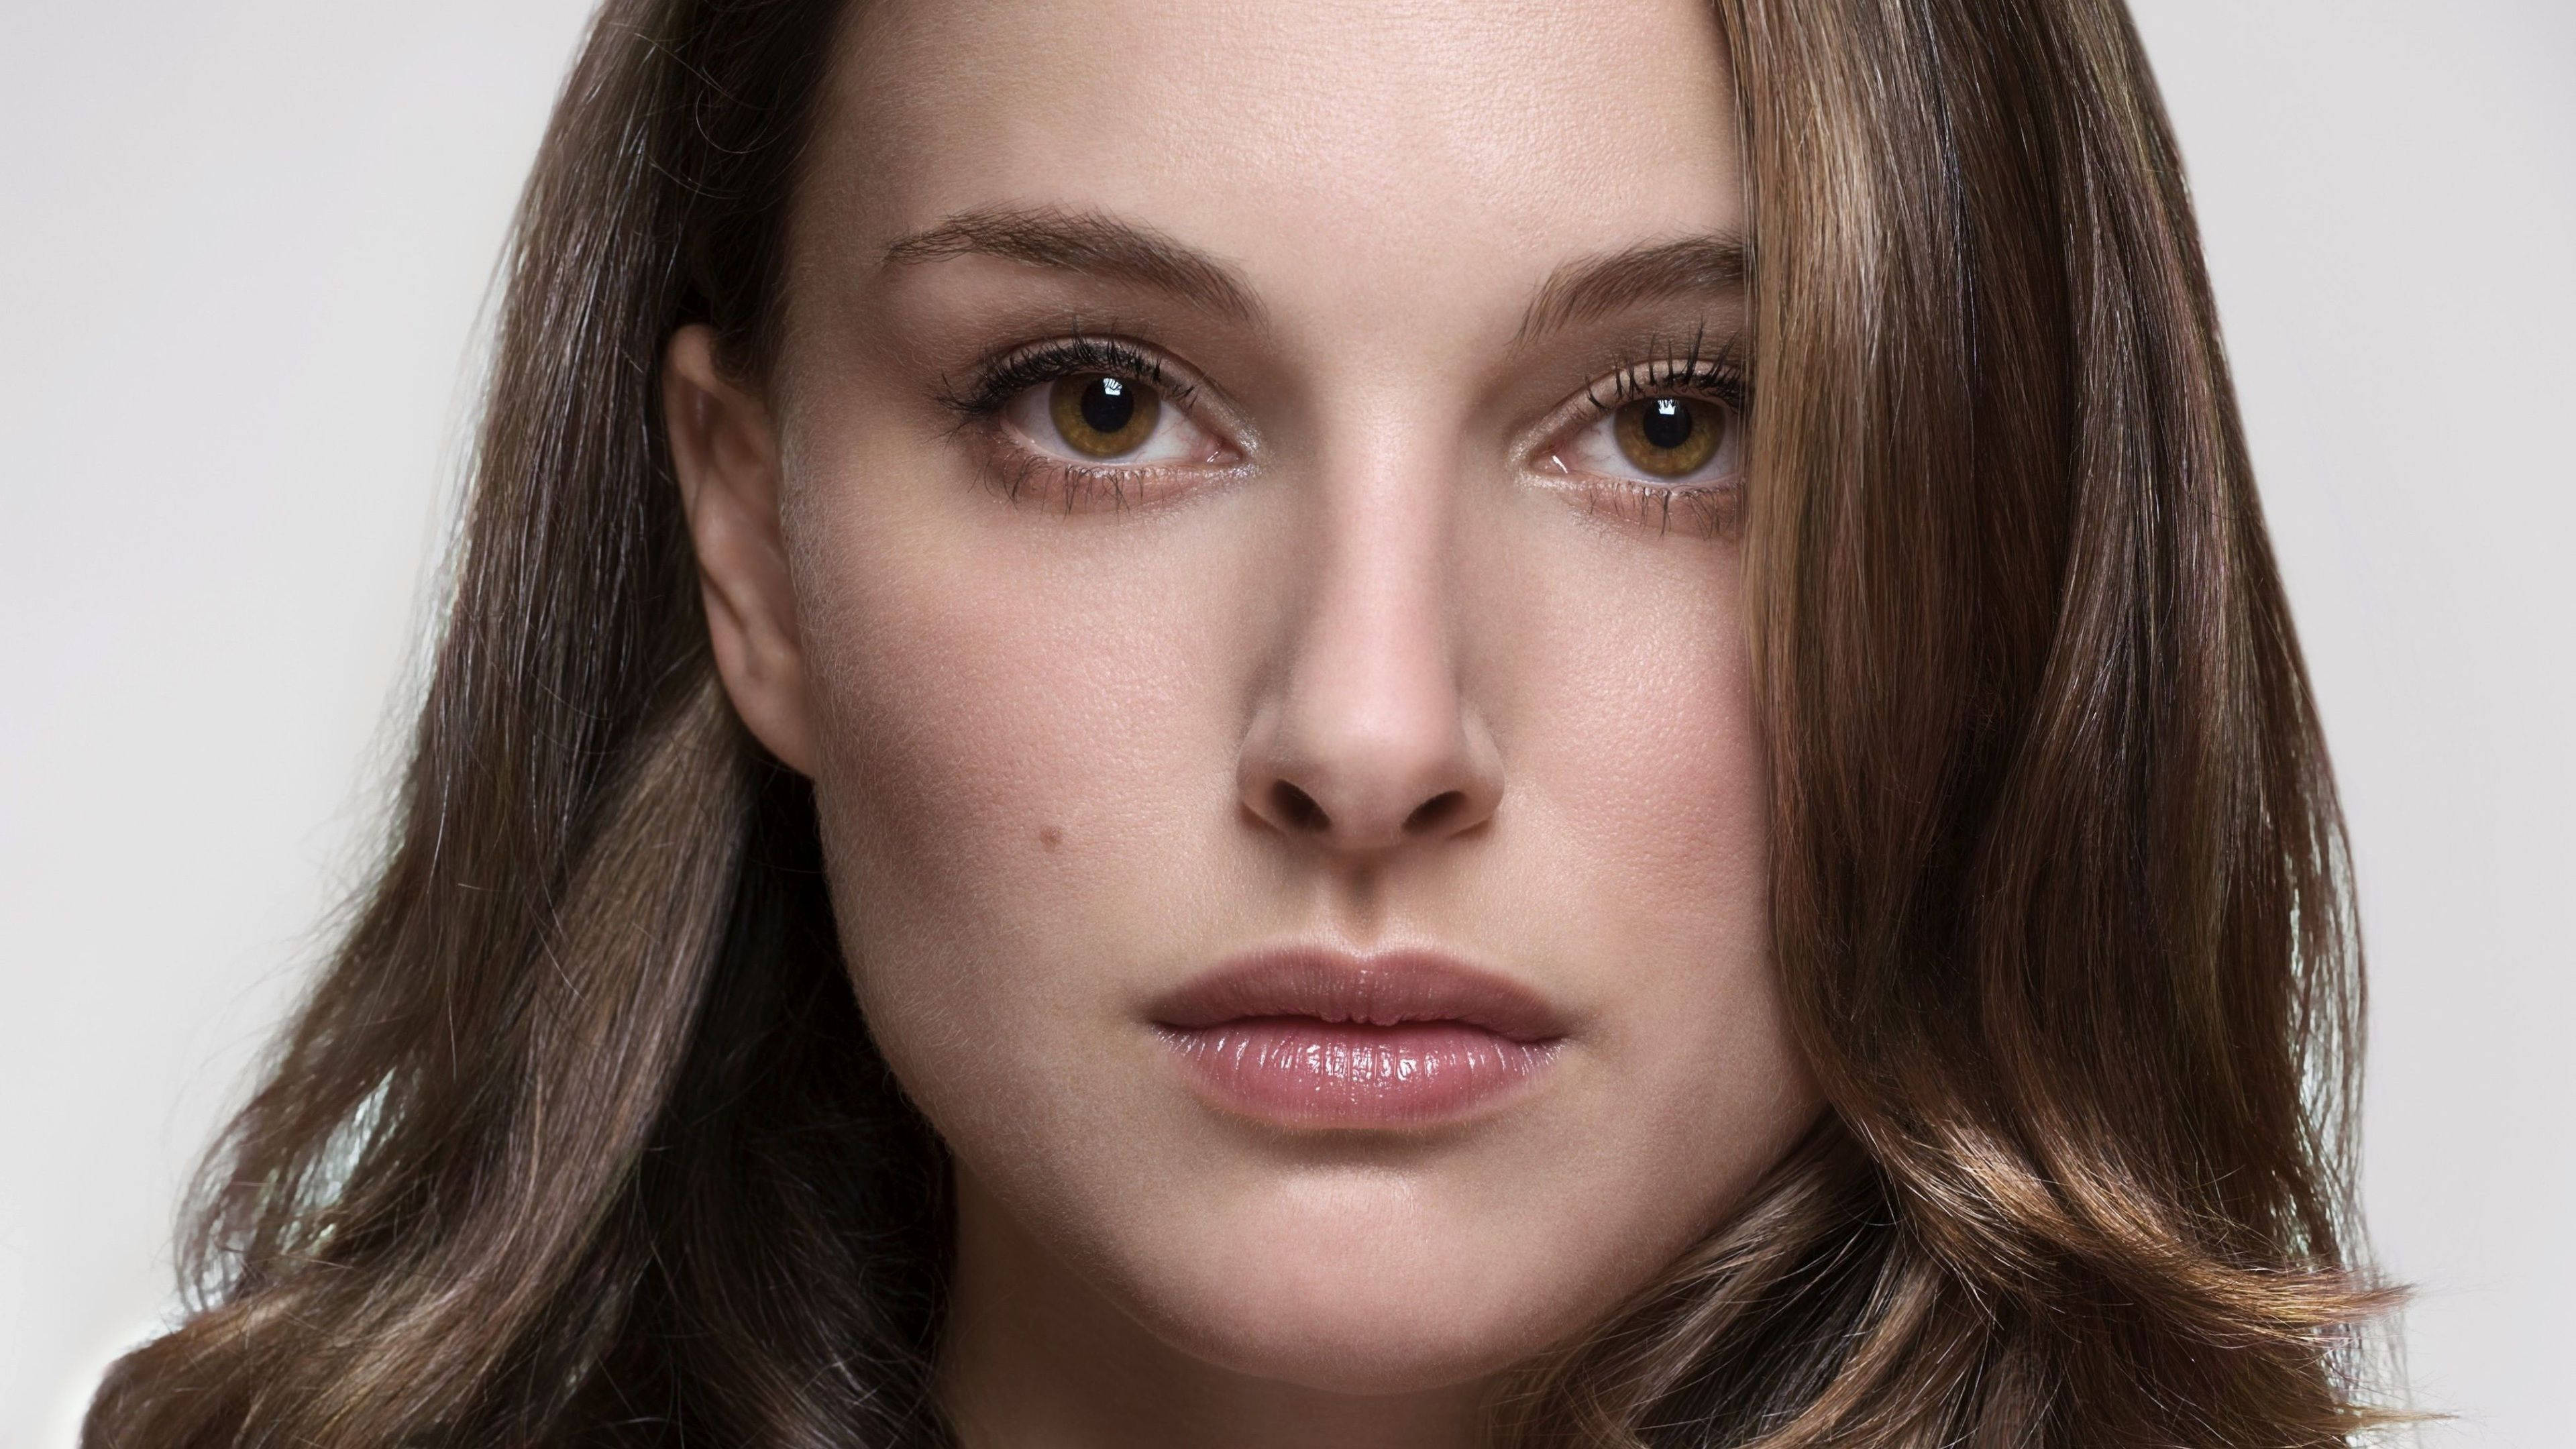 Download Natalie Portman Without Make-up Wallpaper 